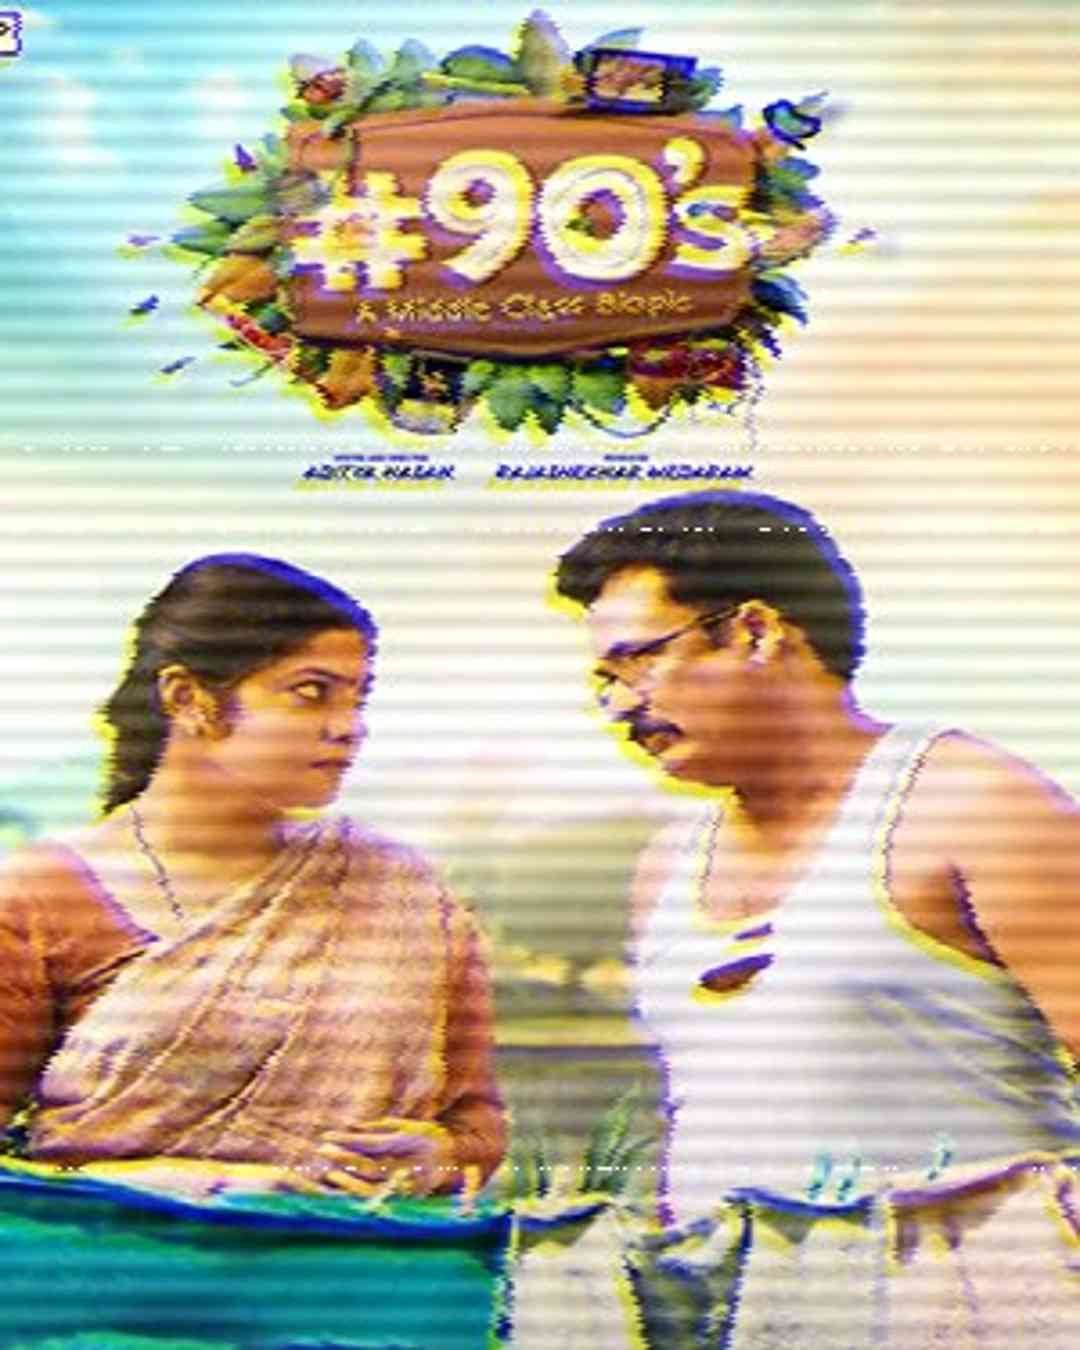 90s movie